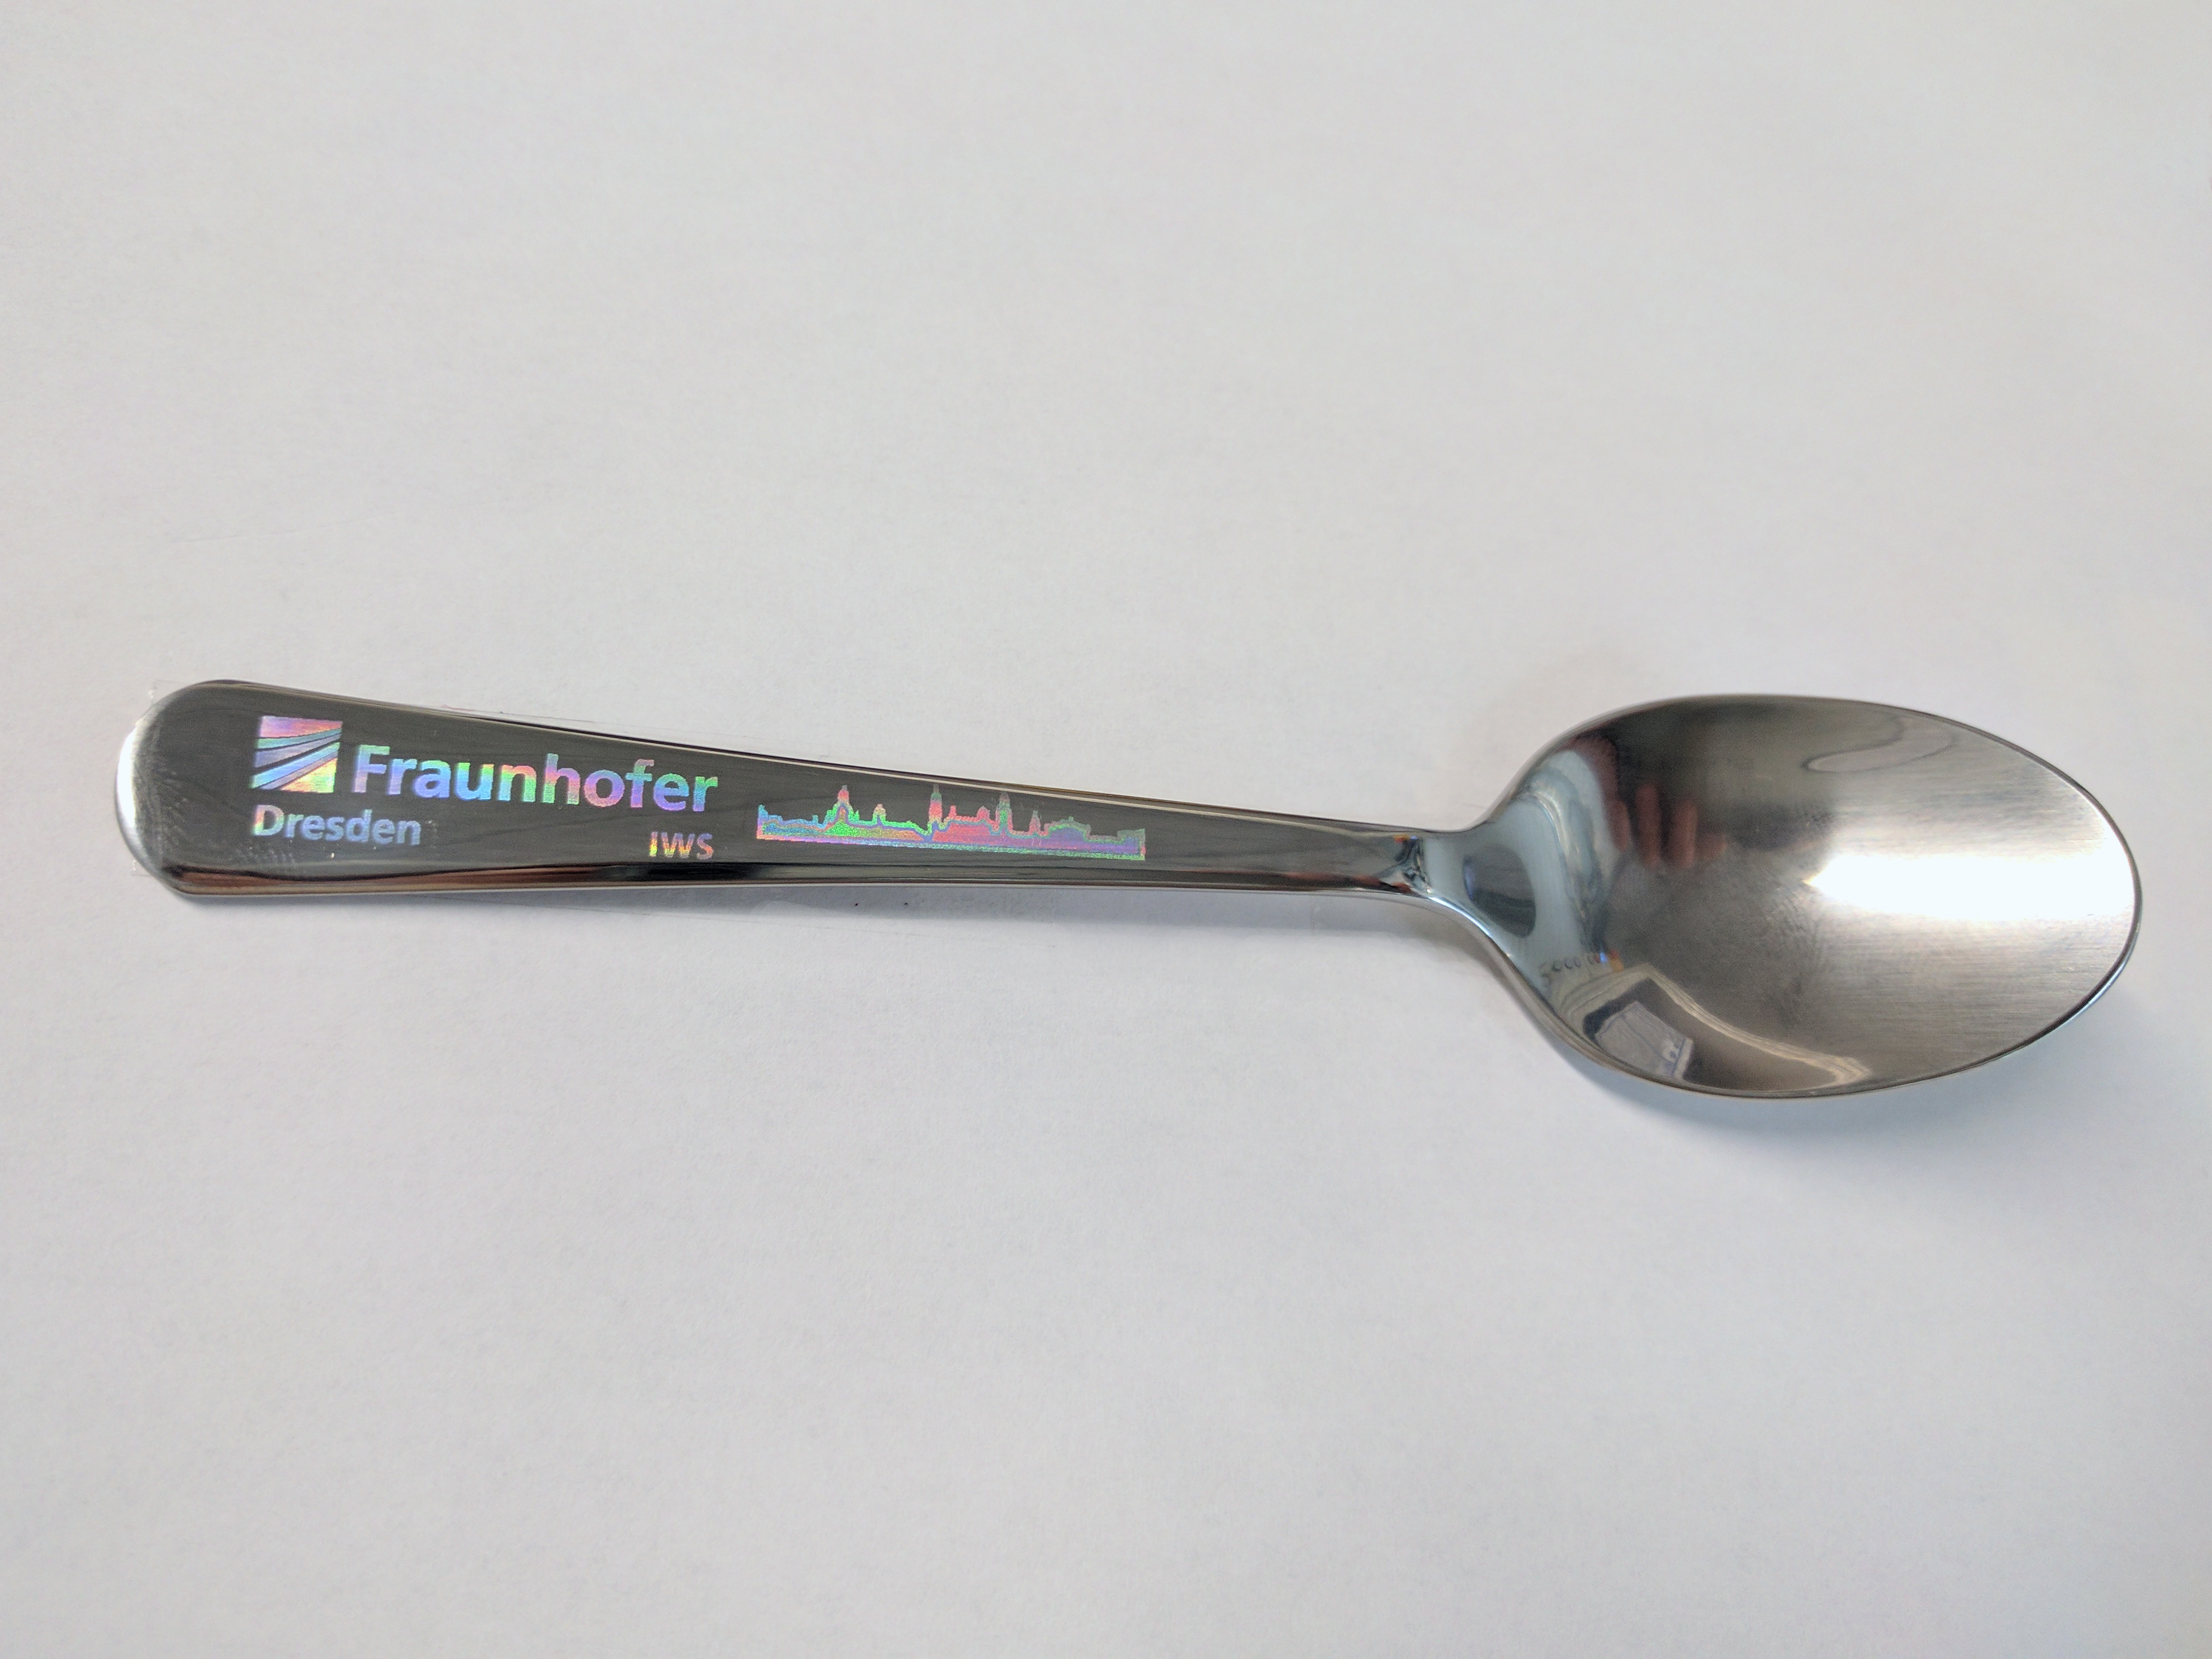 Decorative element „Fraunhofer IWS“ on a spoon